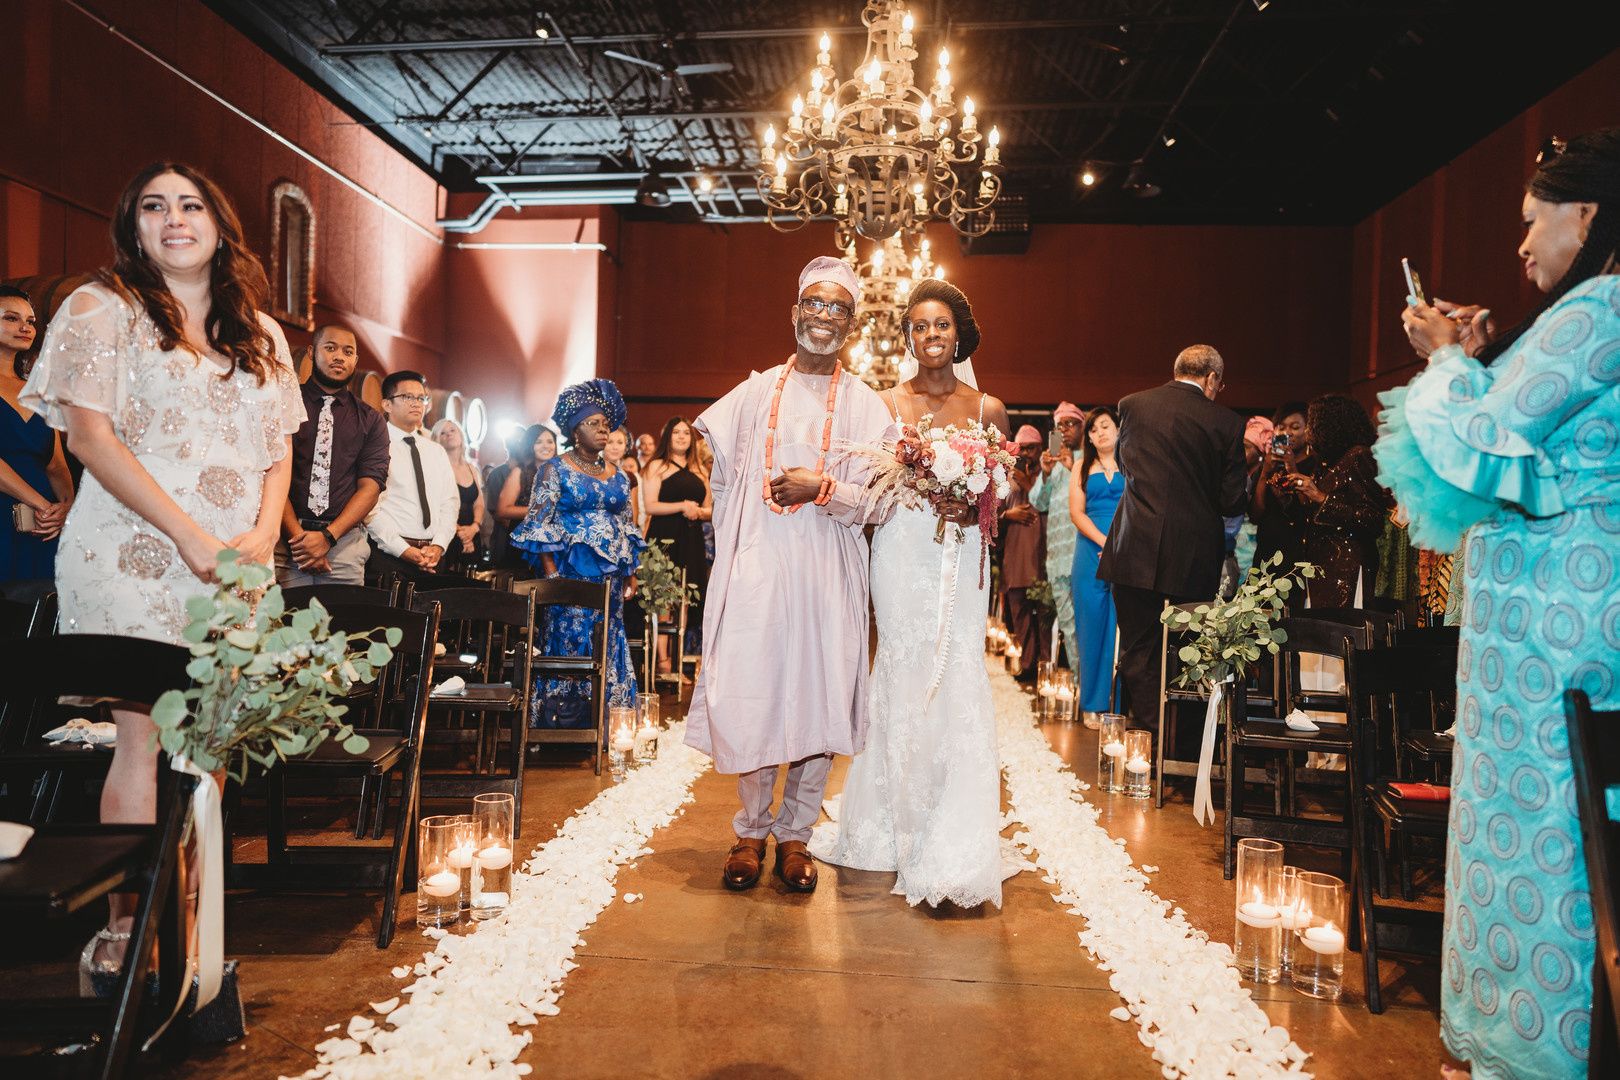 Isiagu Igbo Wedding Dress, Igbo Traditional Marriage Attire, Igbo Bride,  Igbo Cultural Outfit, Igbo Wedding, Igbo Isiagu Cultural Wedding -   Hong Kong